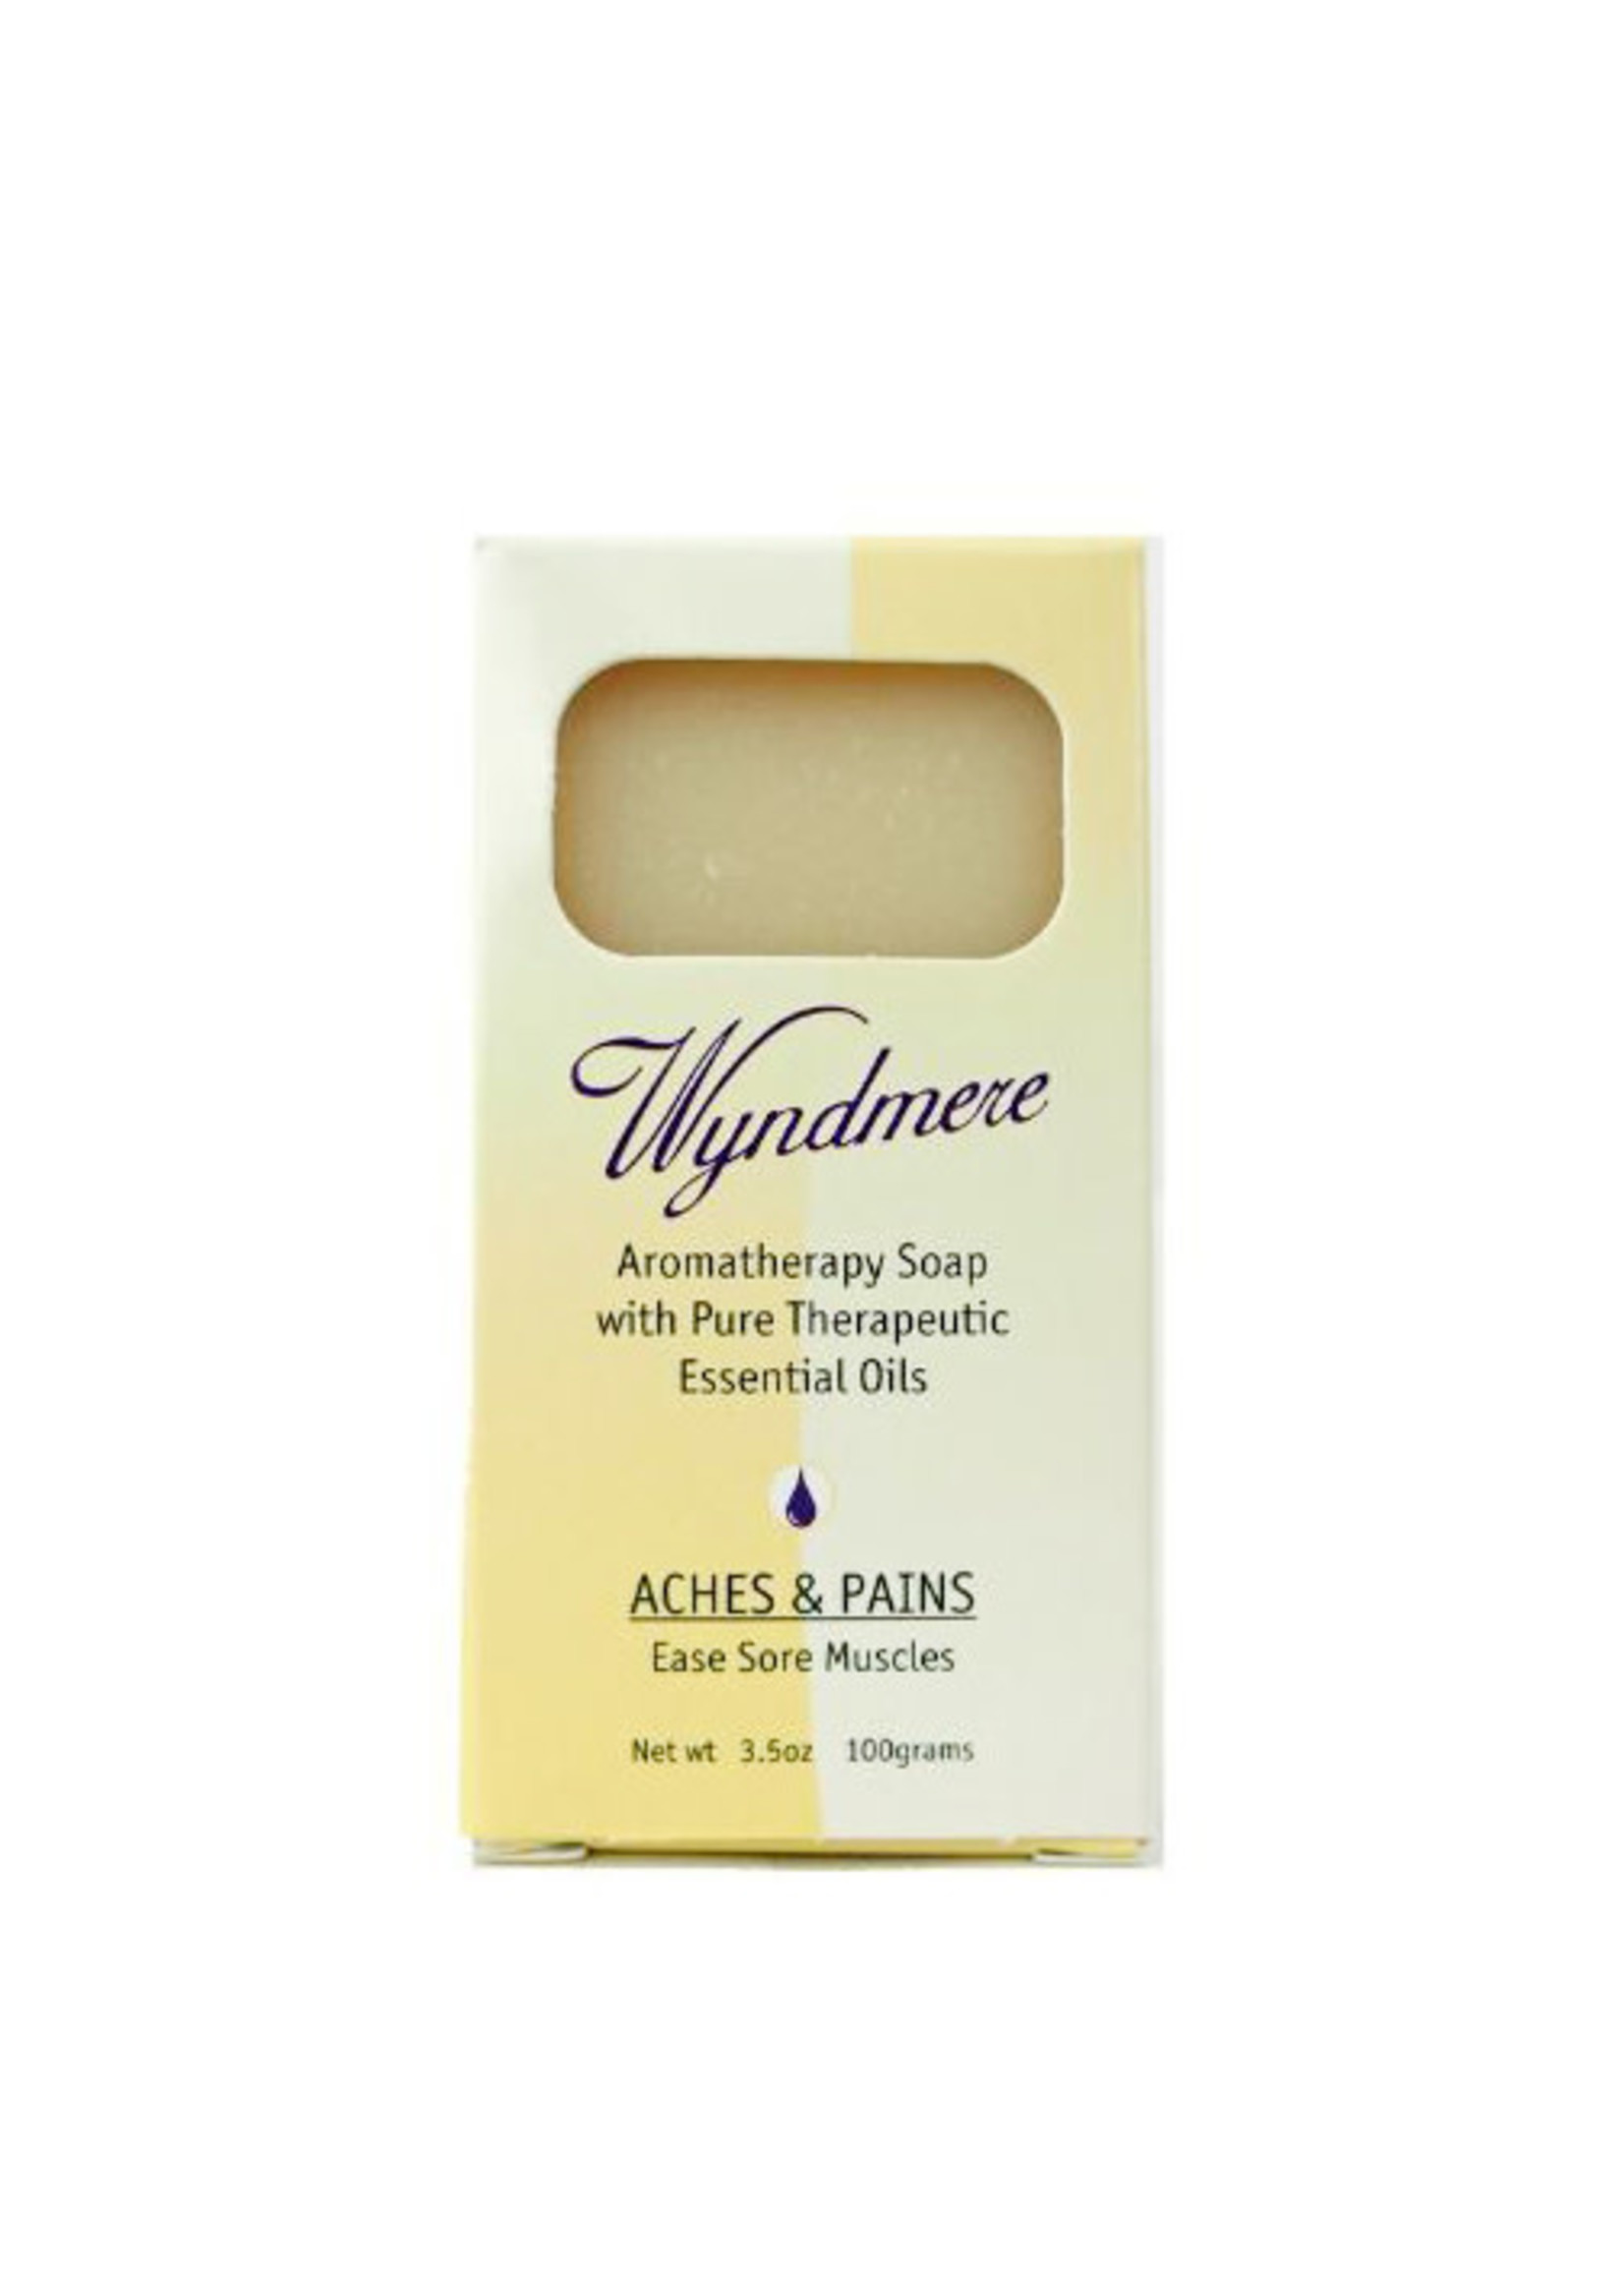 Aches & Pains Soap Wyndmere